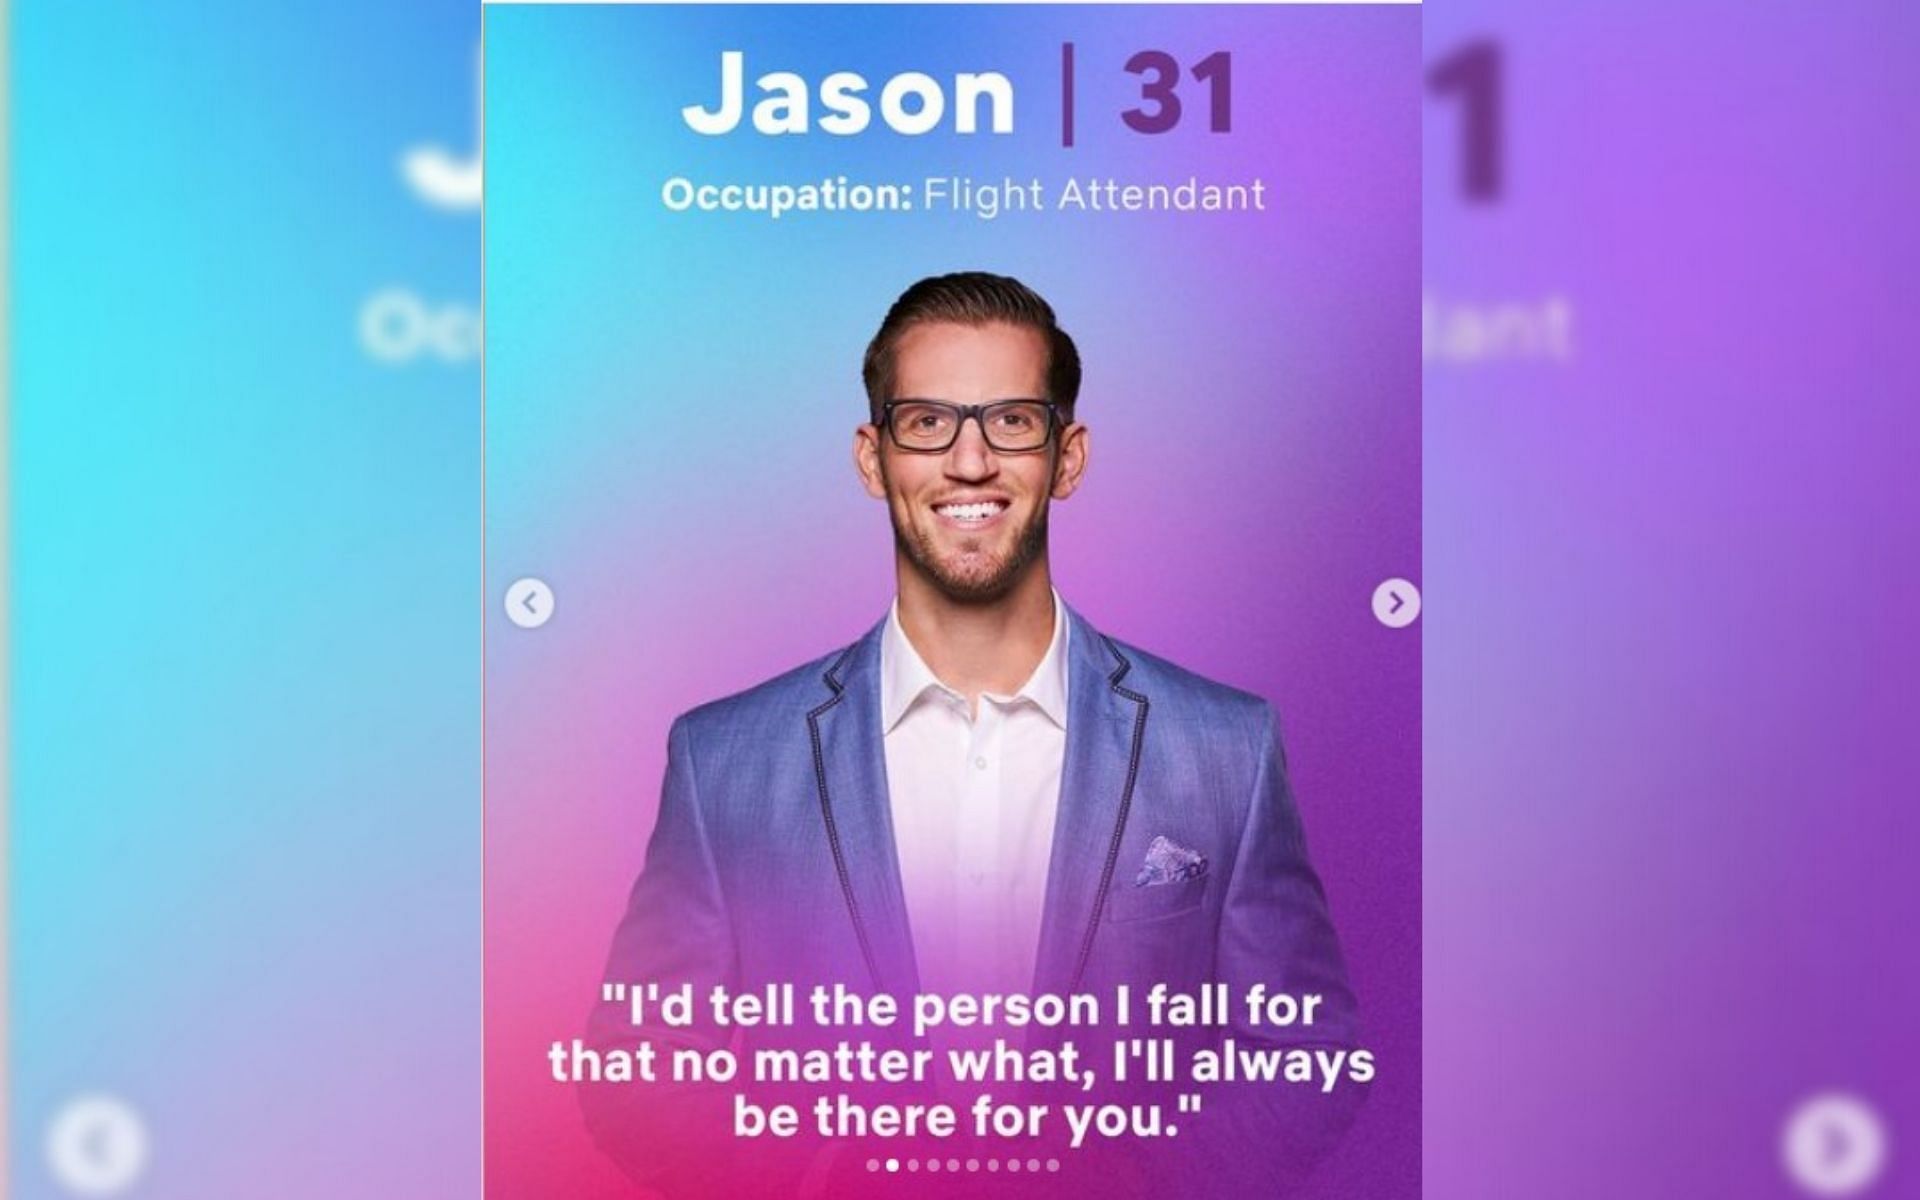 Jason&#039;s profile for the show (Image via loveisblindnetflix)